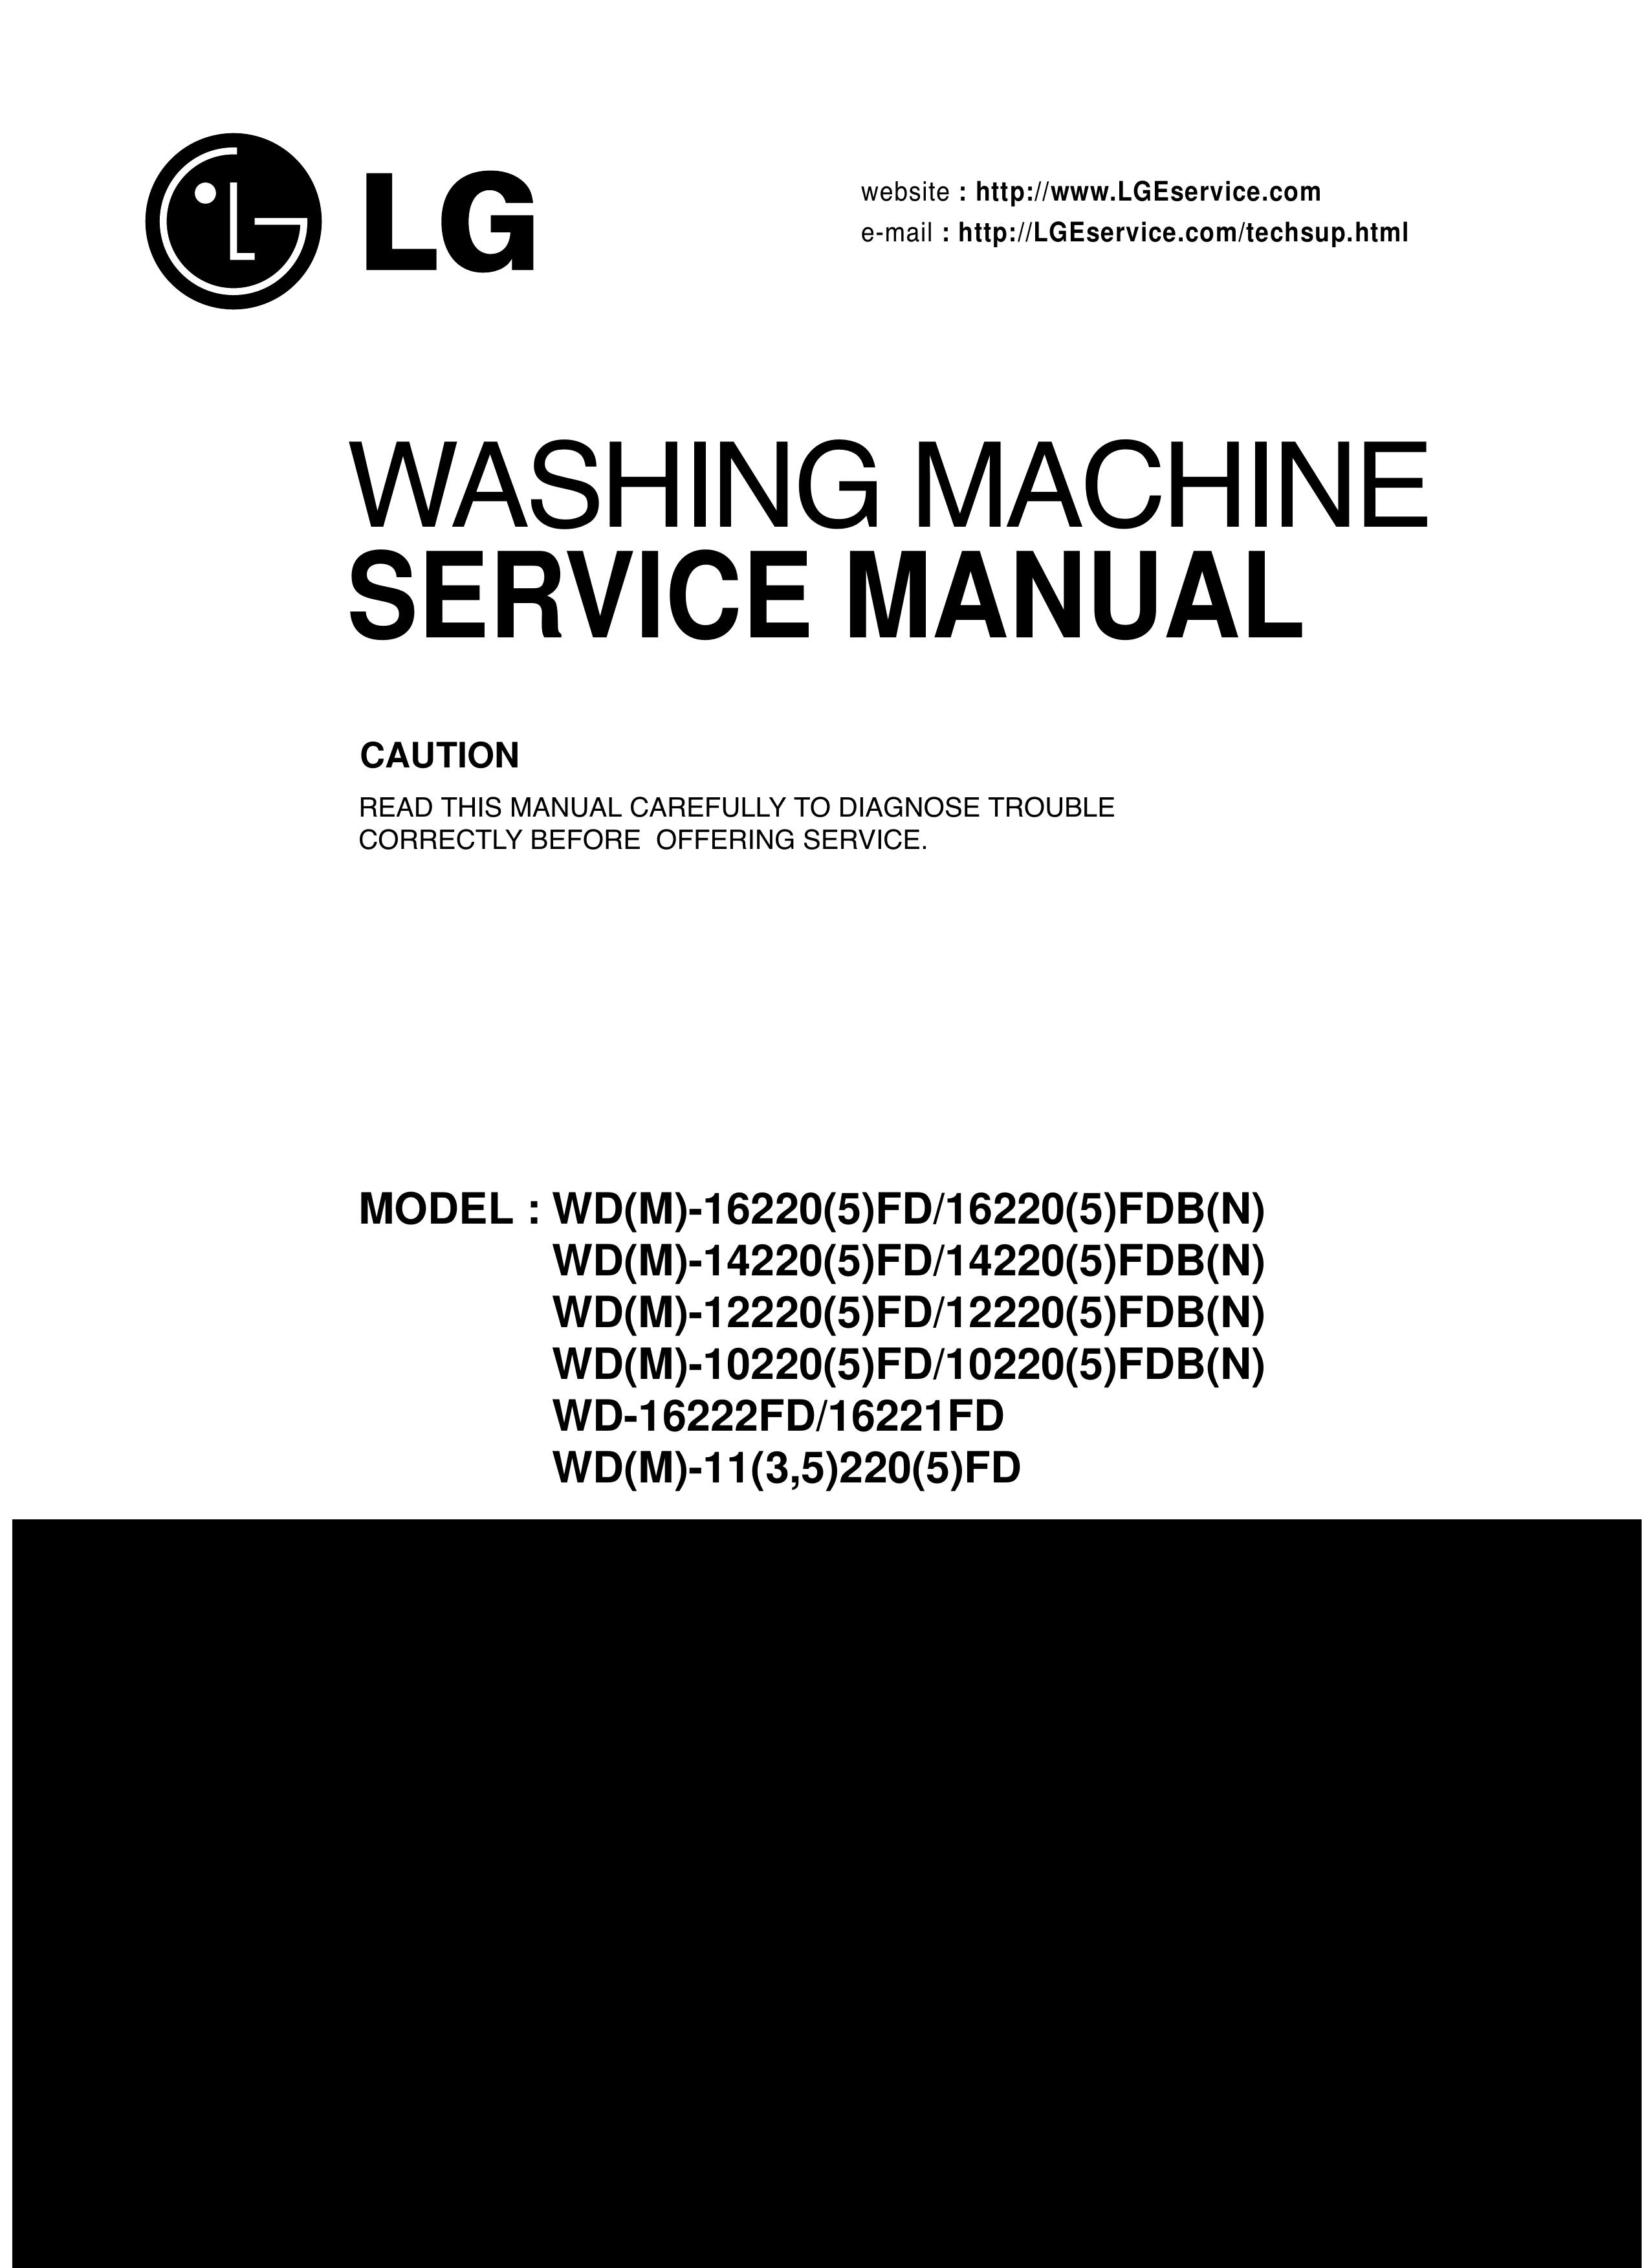 LG Electronics 12220(5)FDB(N) Washer User Manual